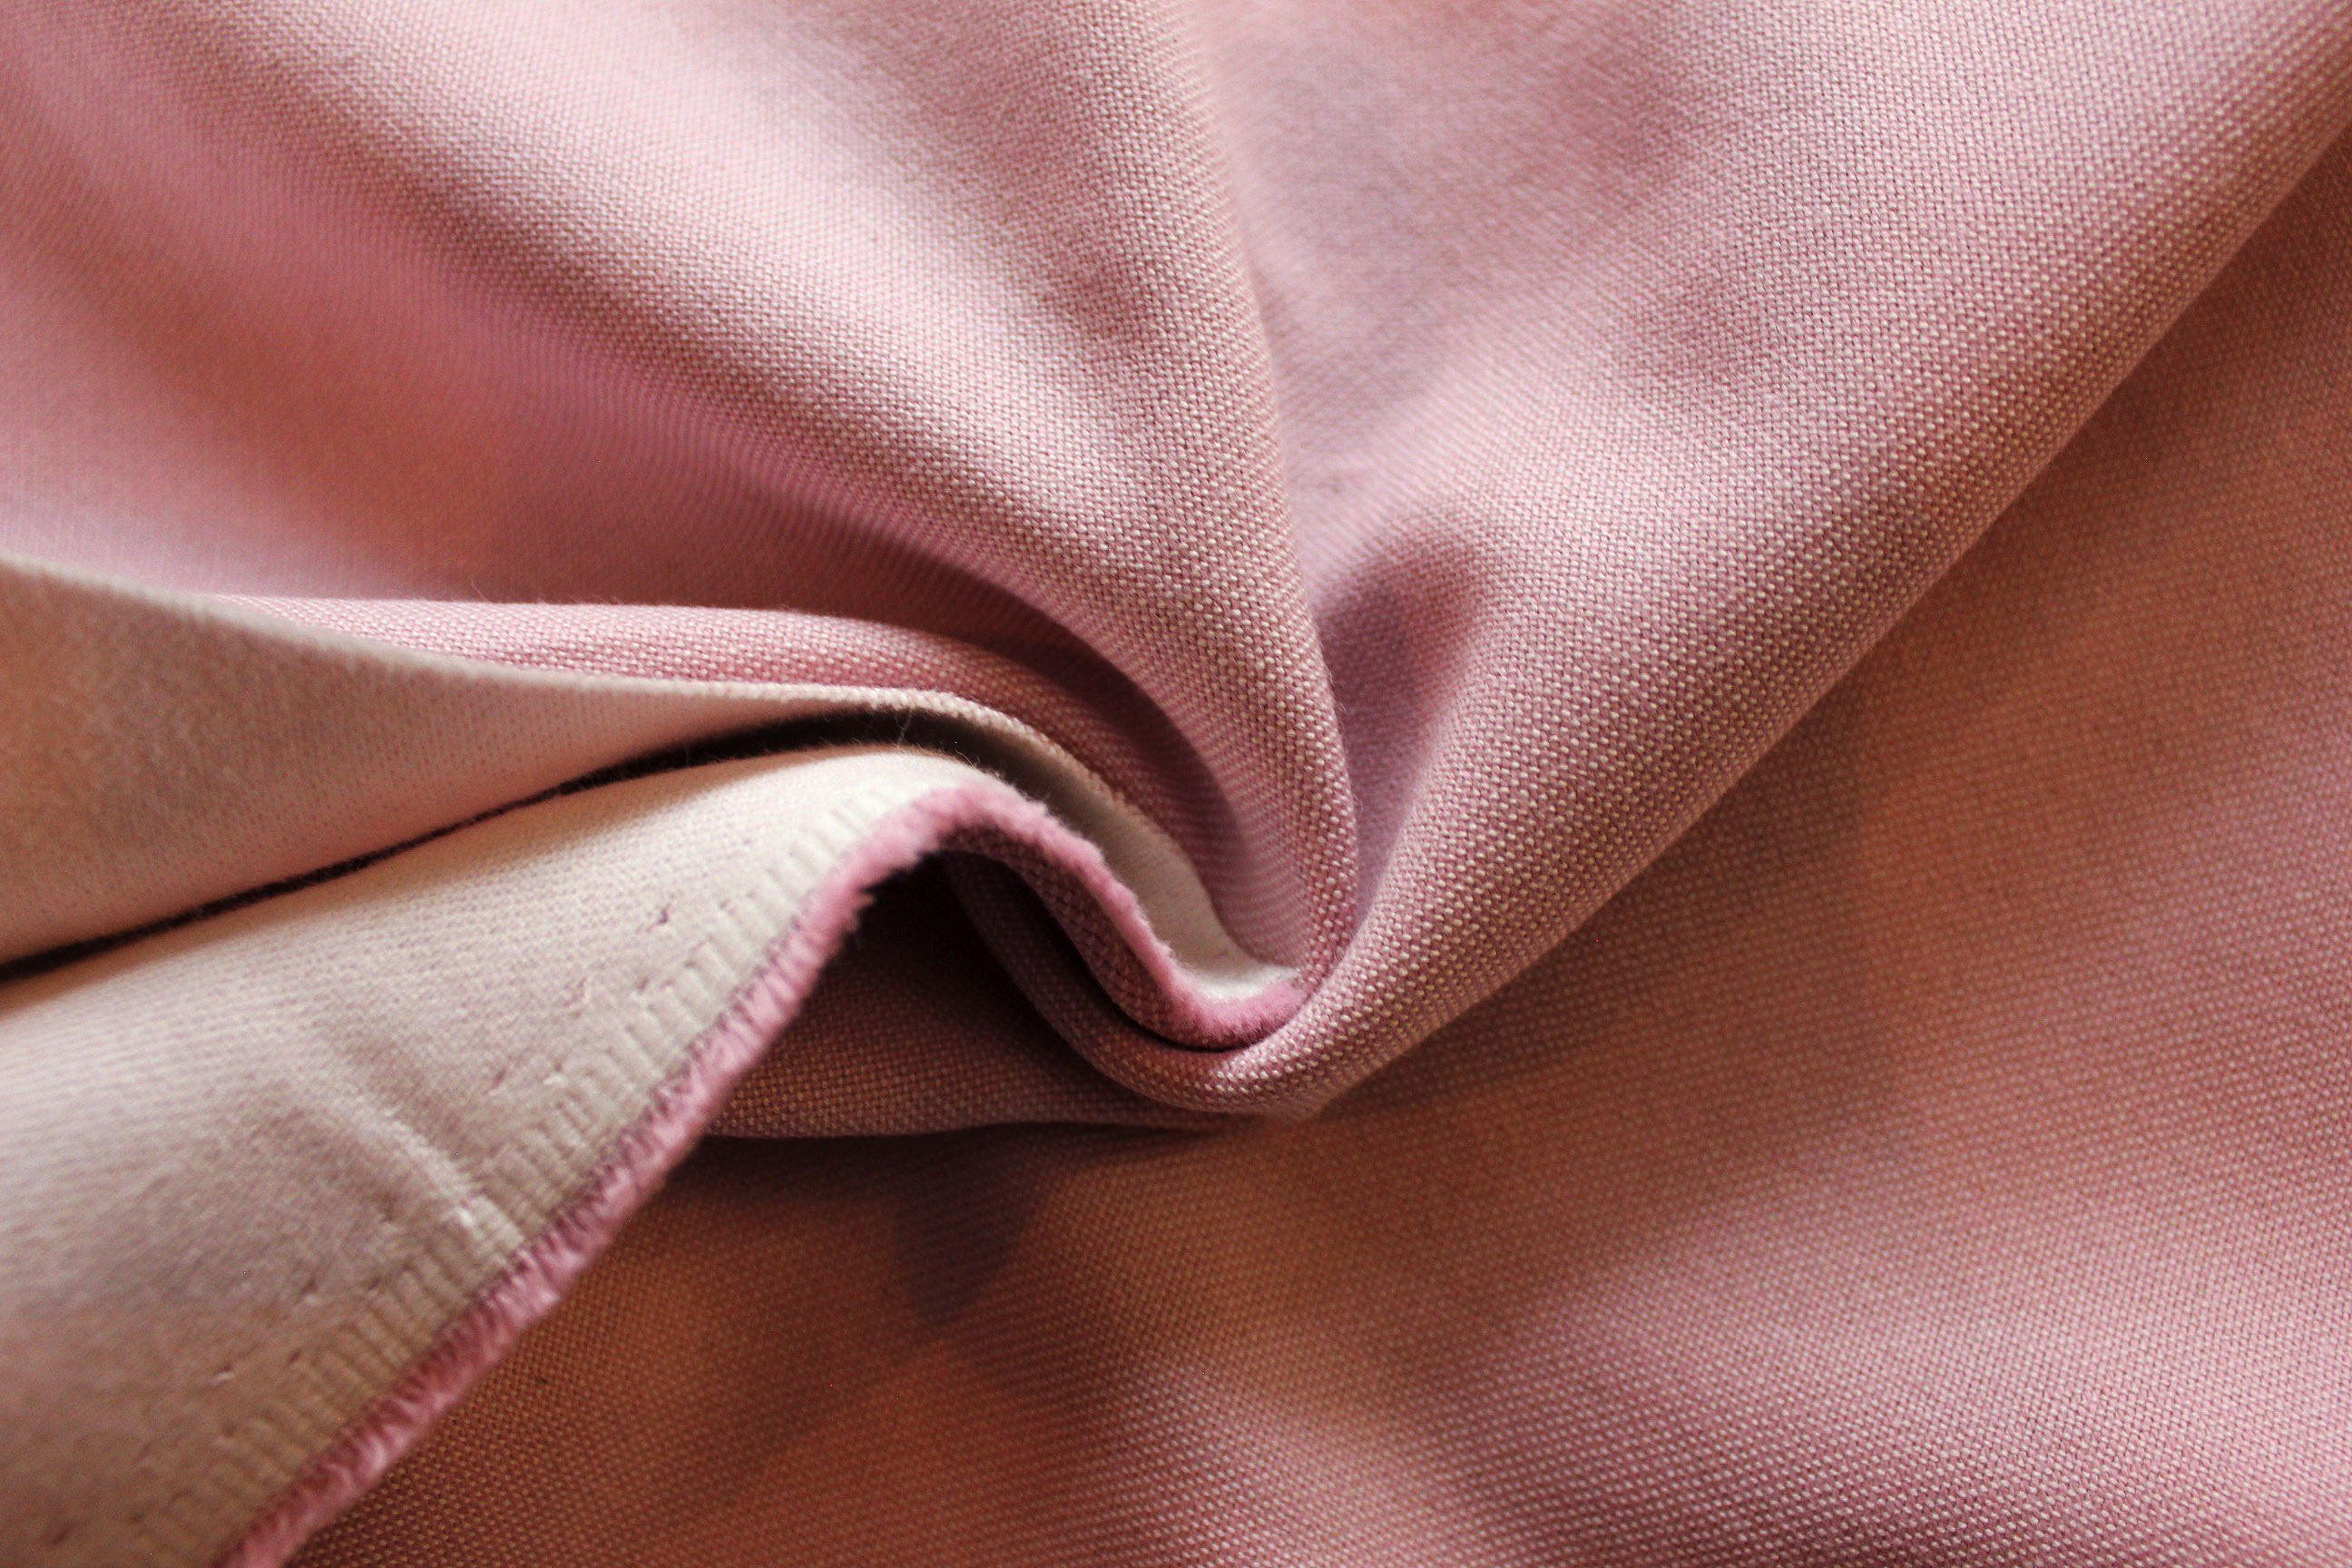 Vorhang Uni Collection, Adam, nachhaltig rosa (1 Jacquard, Ösen blickdicht, St)